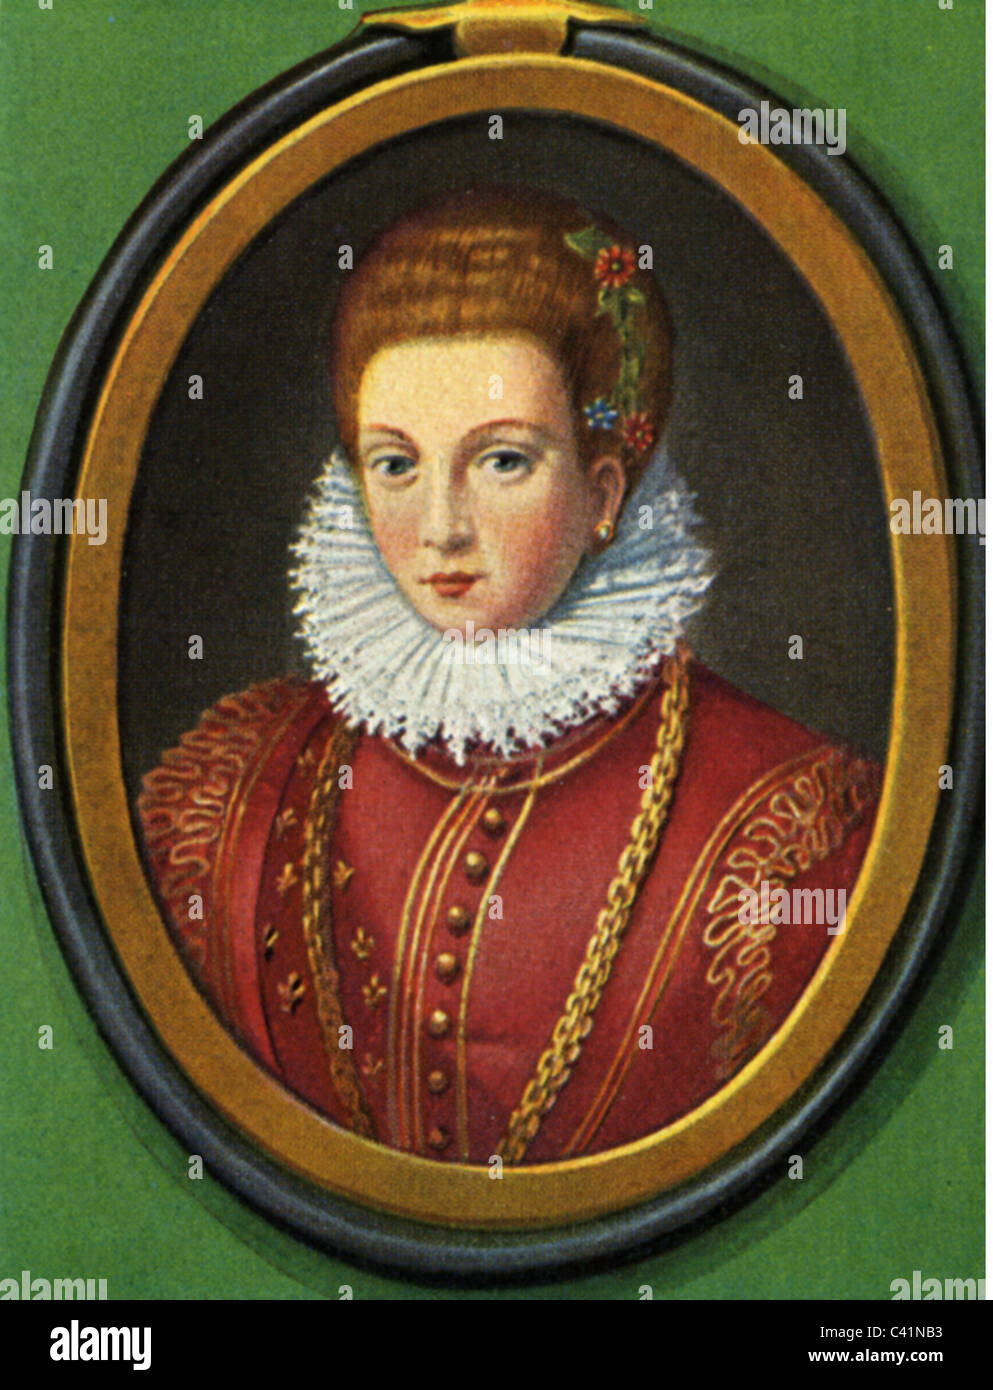 Maria de Medici, 26.4.1573 - 3.7 1642, Queen Consort of France 5.10.1600 - 15.4.1610, Regent 14.5.1610 - 2.5.1617, portrait, print after miniature, 17th century, cigarette card, Germany, 1933, , Stock Photo